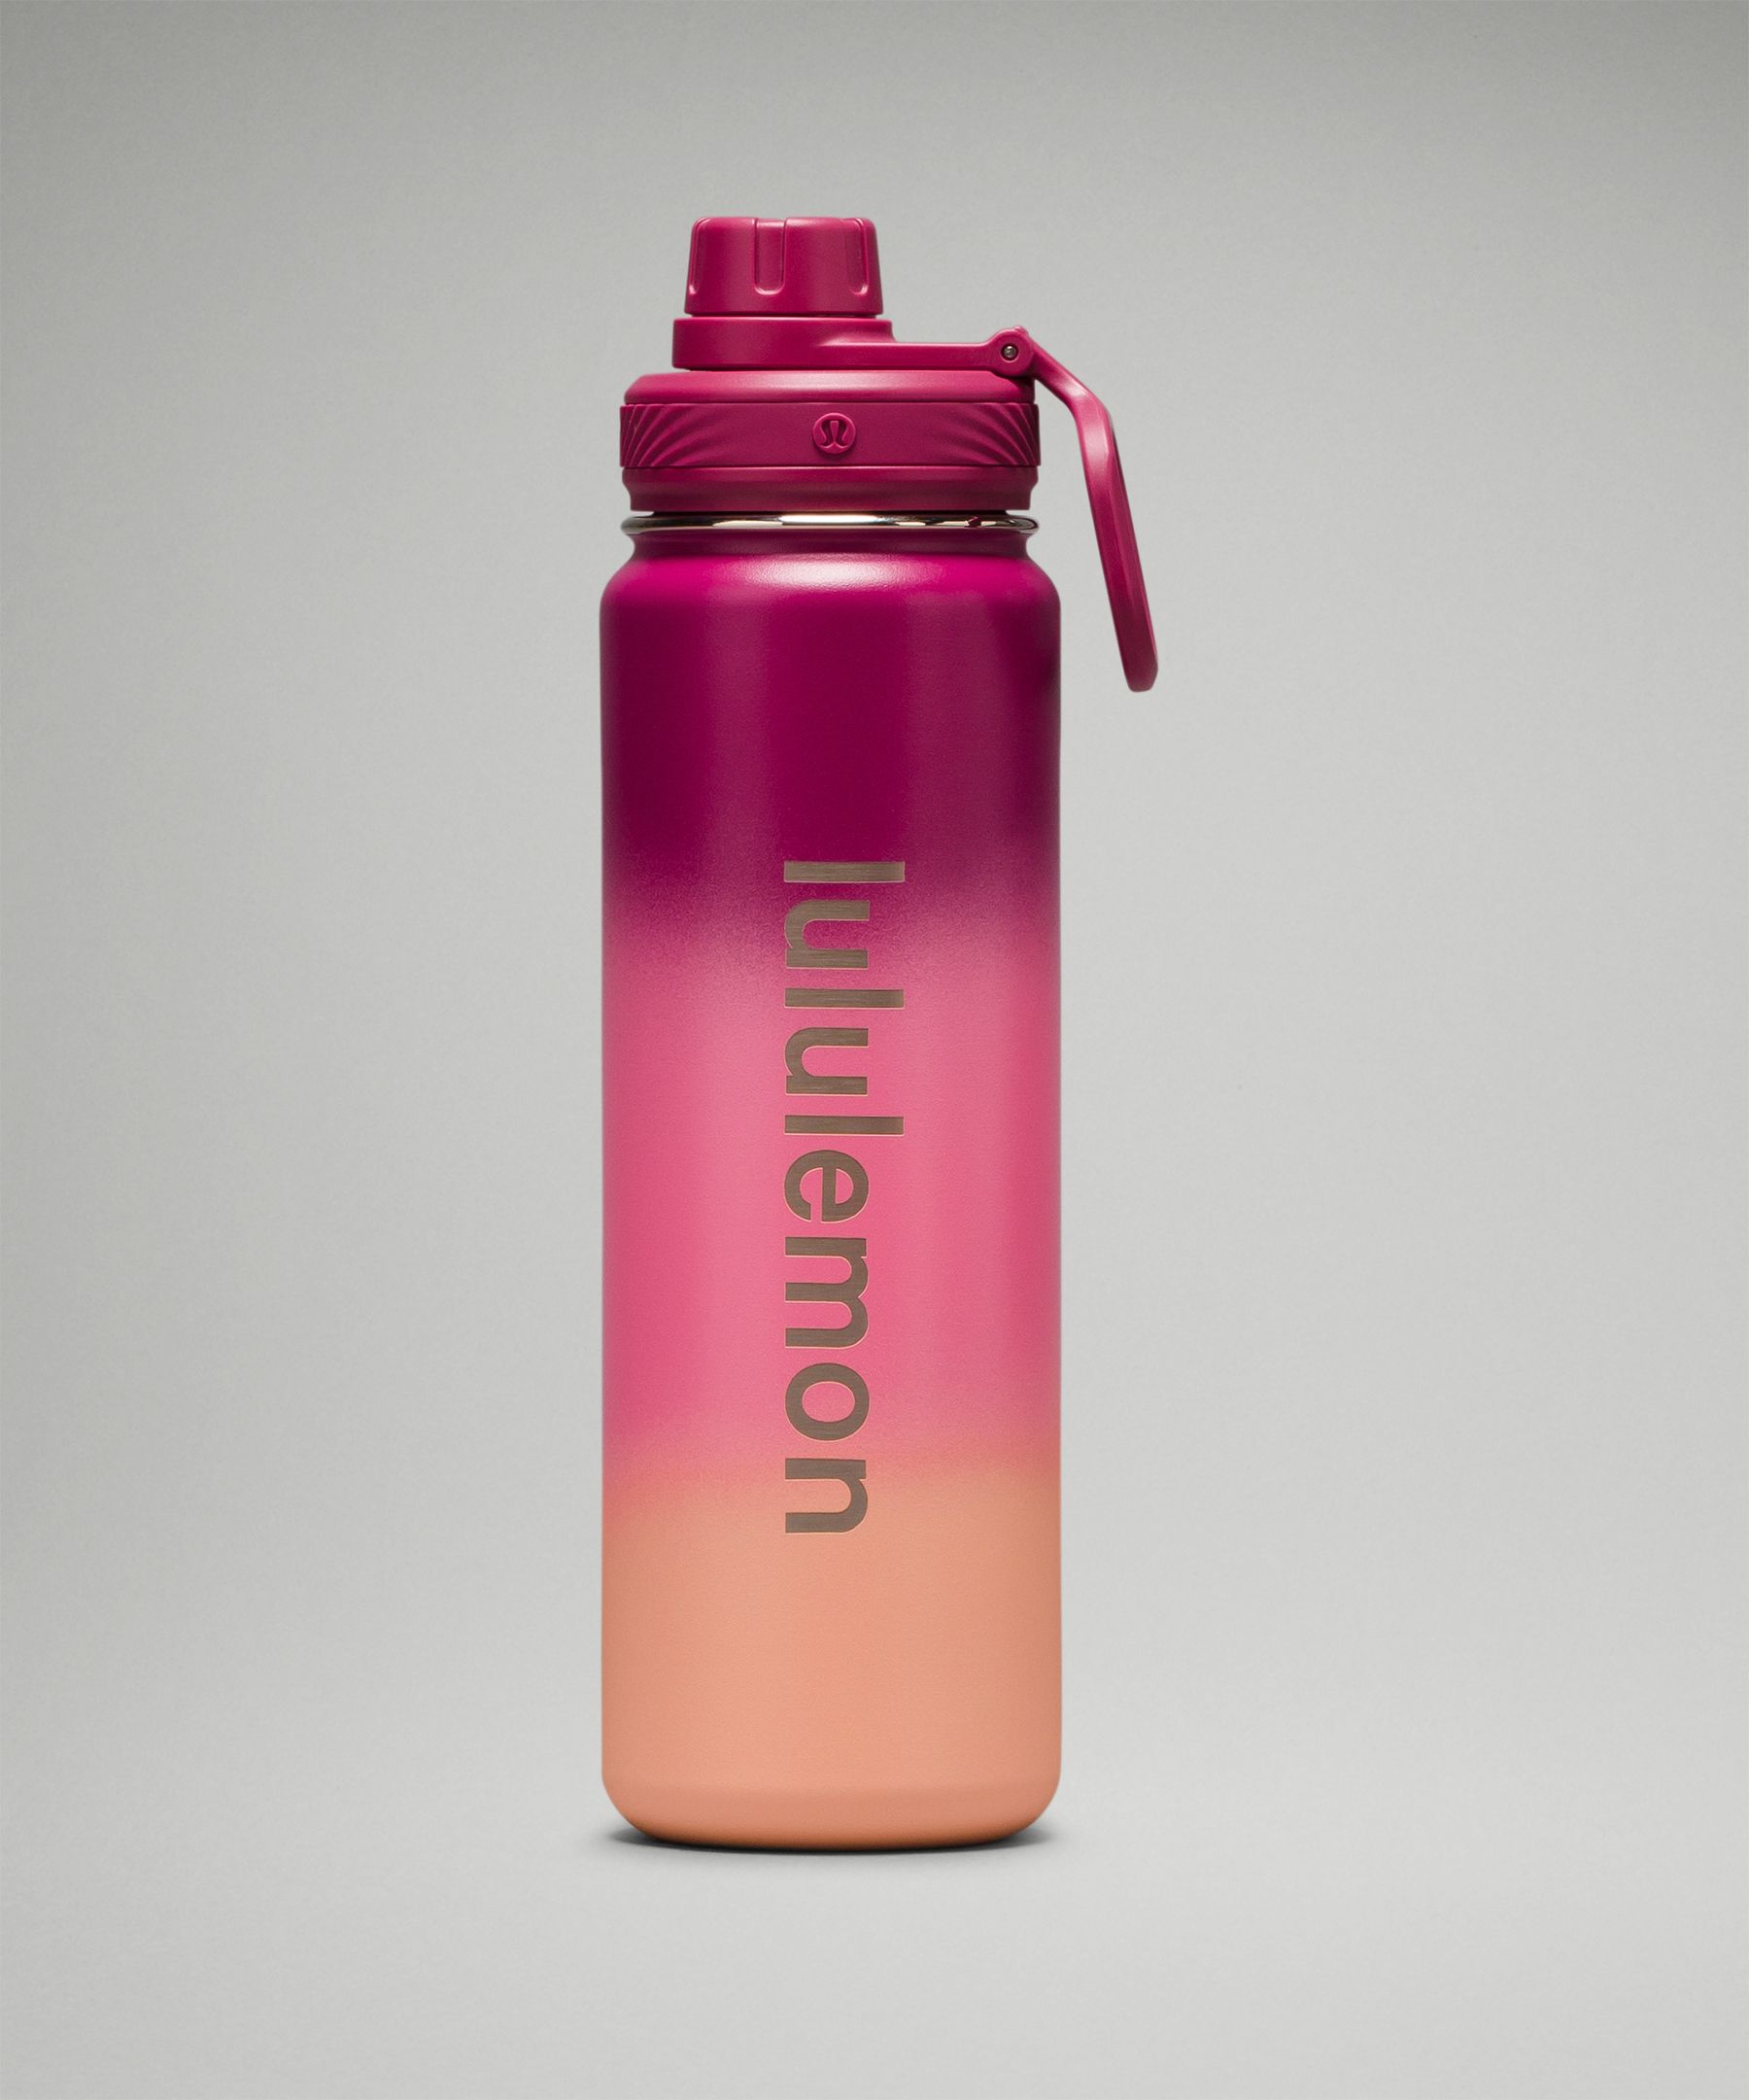 Lululemon Water Bottle: Where Fashion Meets Functionality, by kumaralingam  chandran